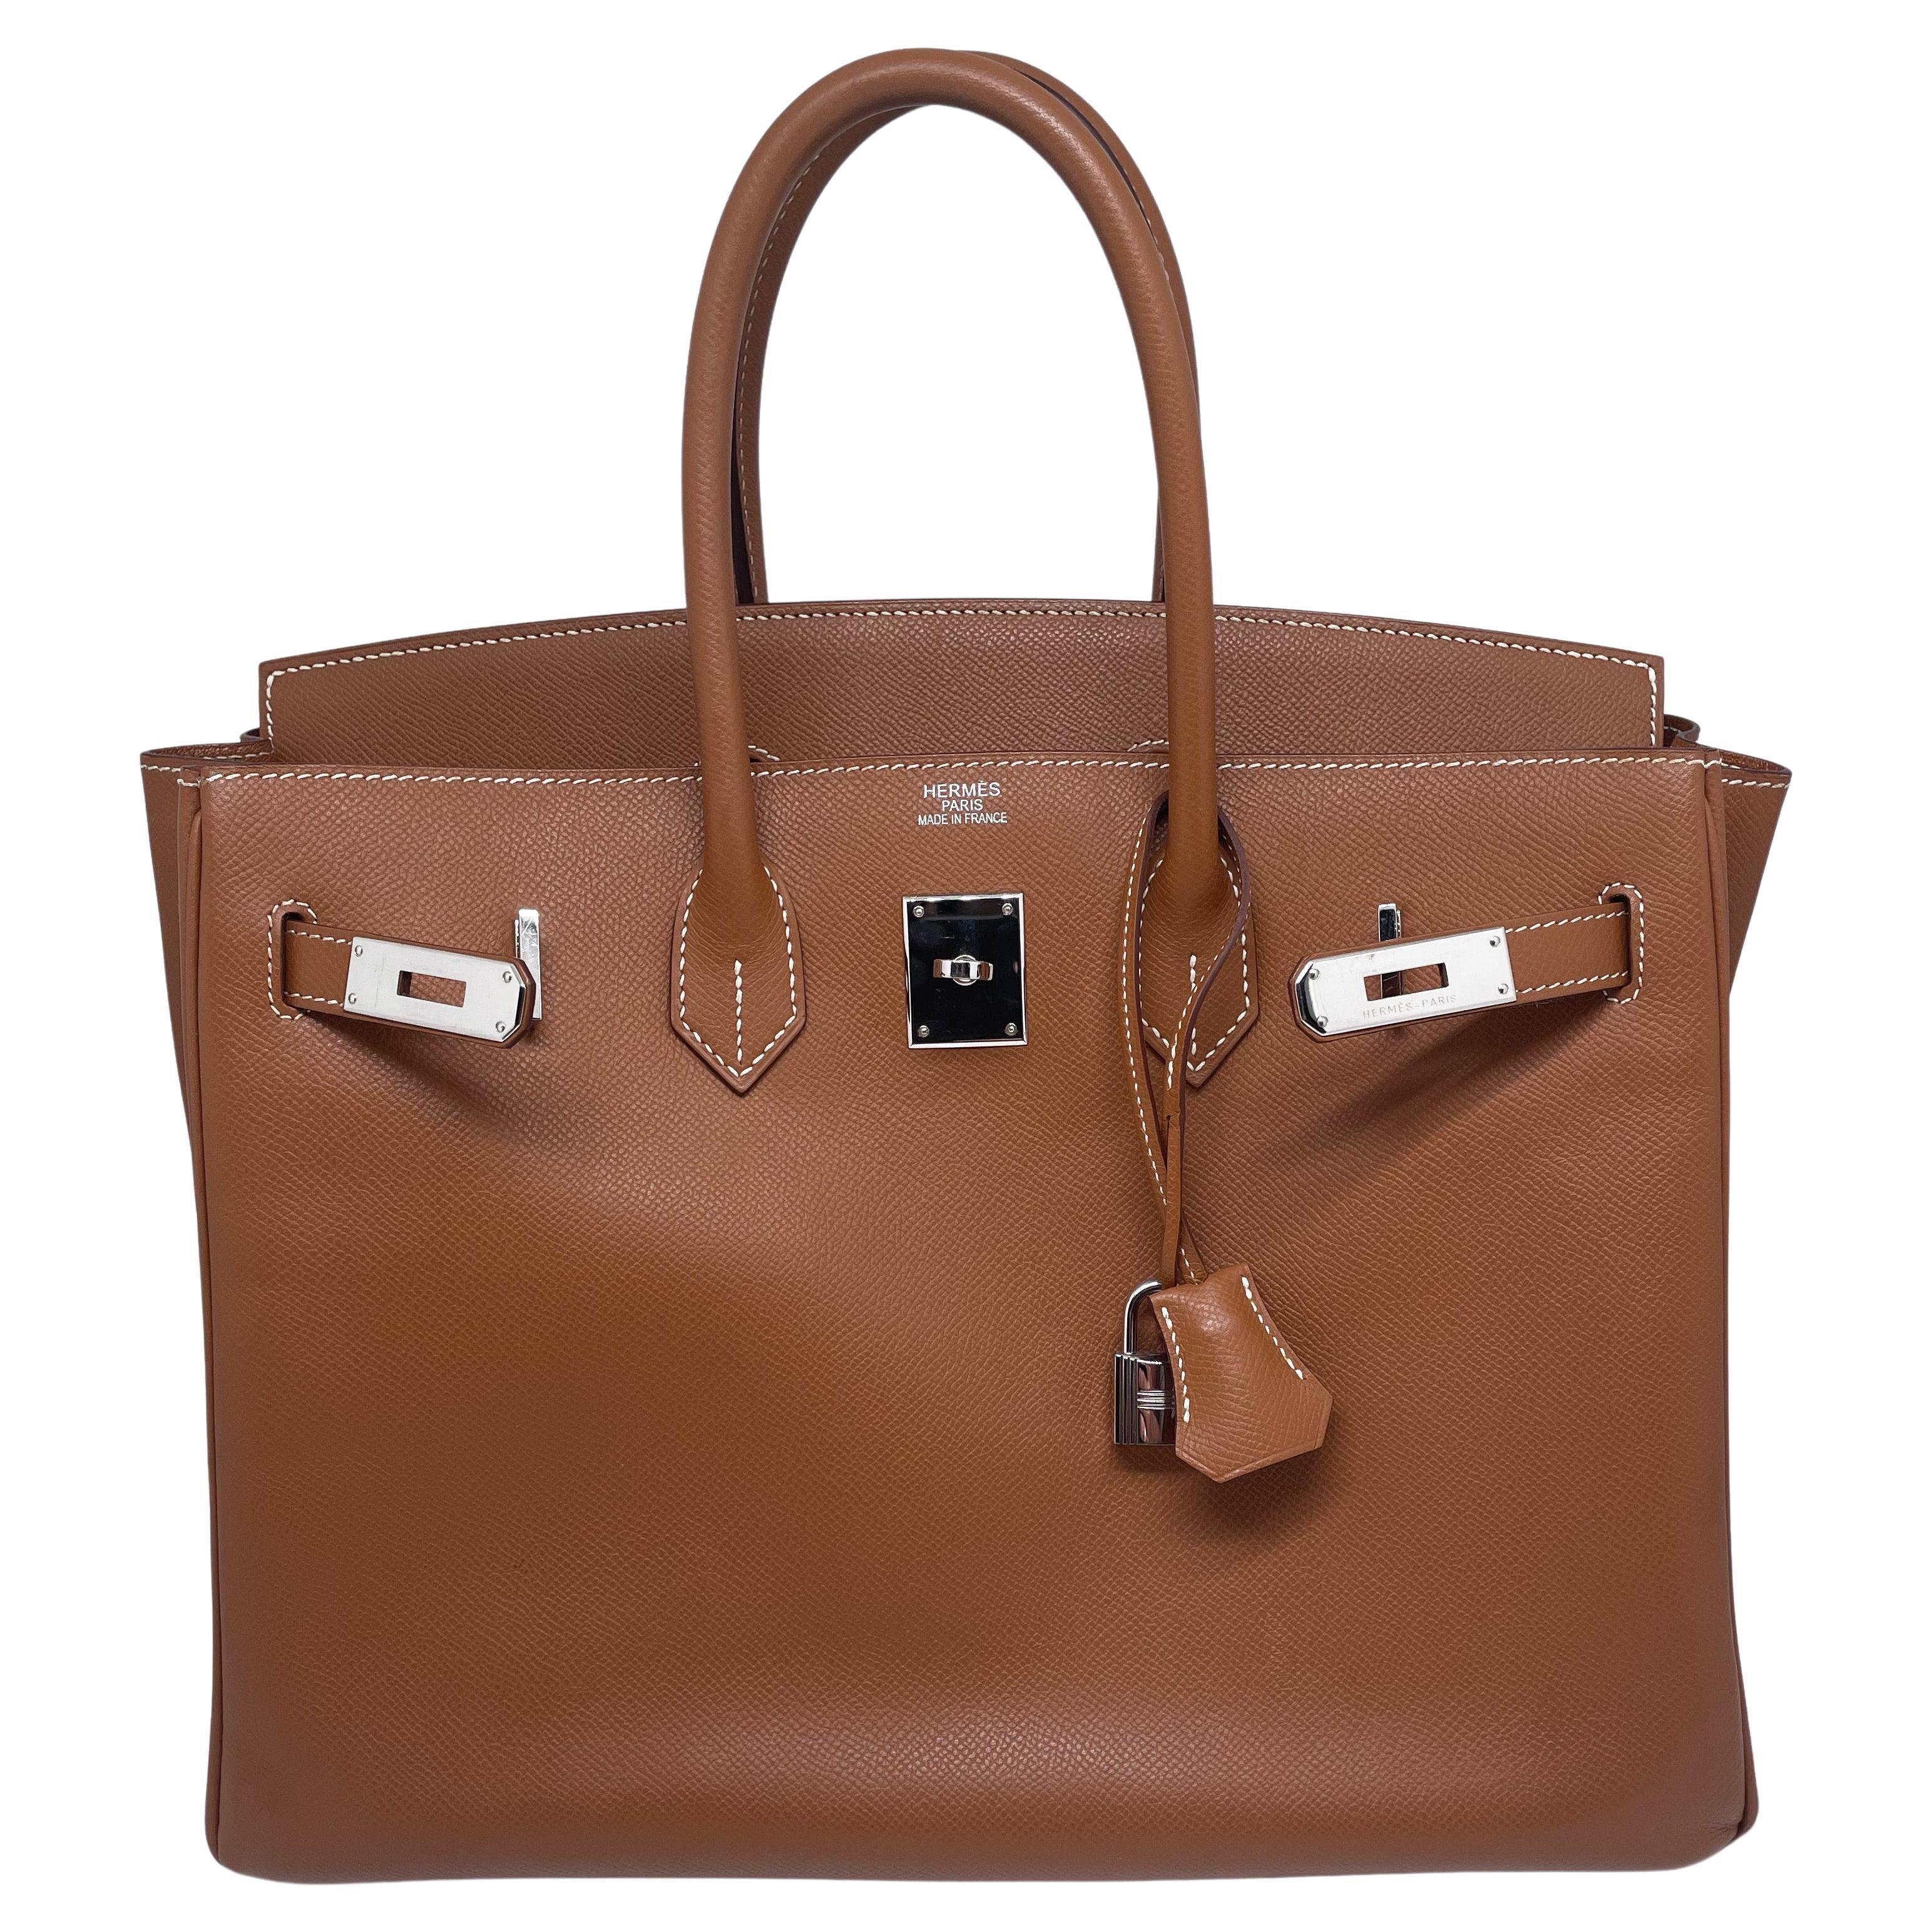 Hermès Birkin 35 Gold handbag in Espom leather and white stitching